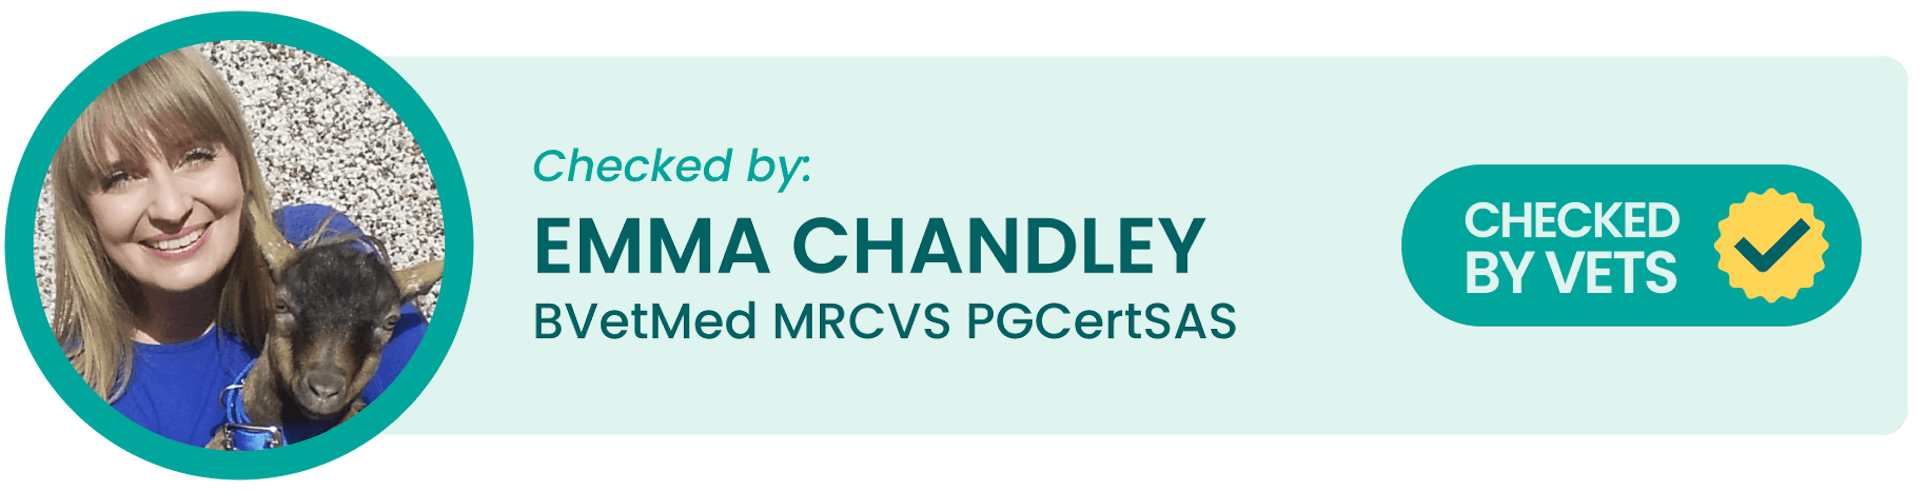 Checked by: Emma Chandley, BVetMed MRCVS PGCertSAS